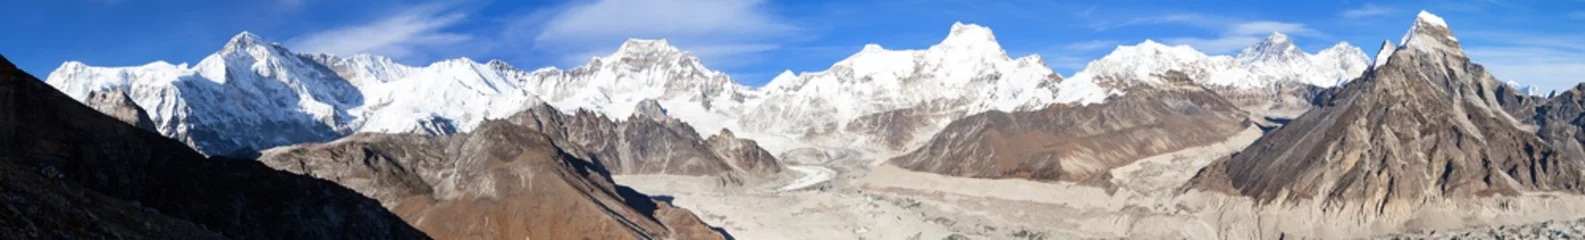 Photo sur Plexiglas Anti-reflet Cho Oyu mount Everest and Lhotse, Nepal Himalayas mountains